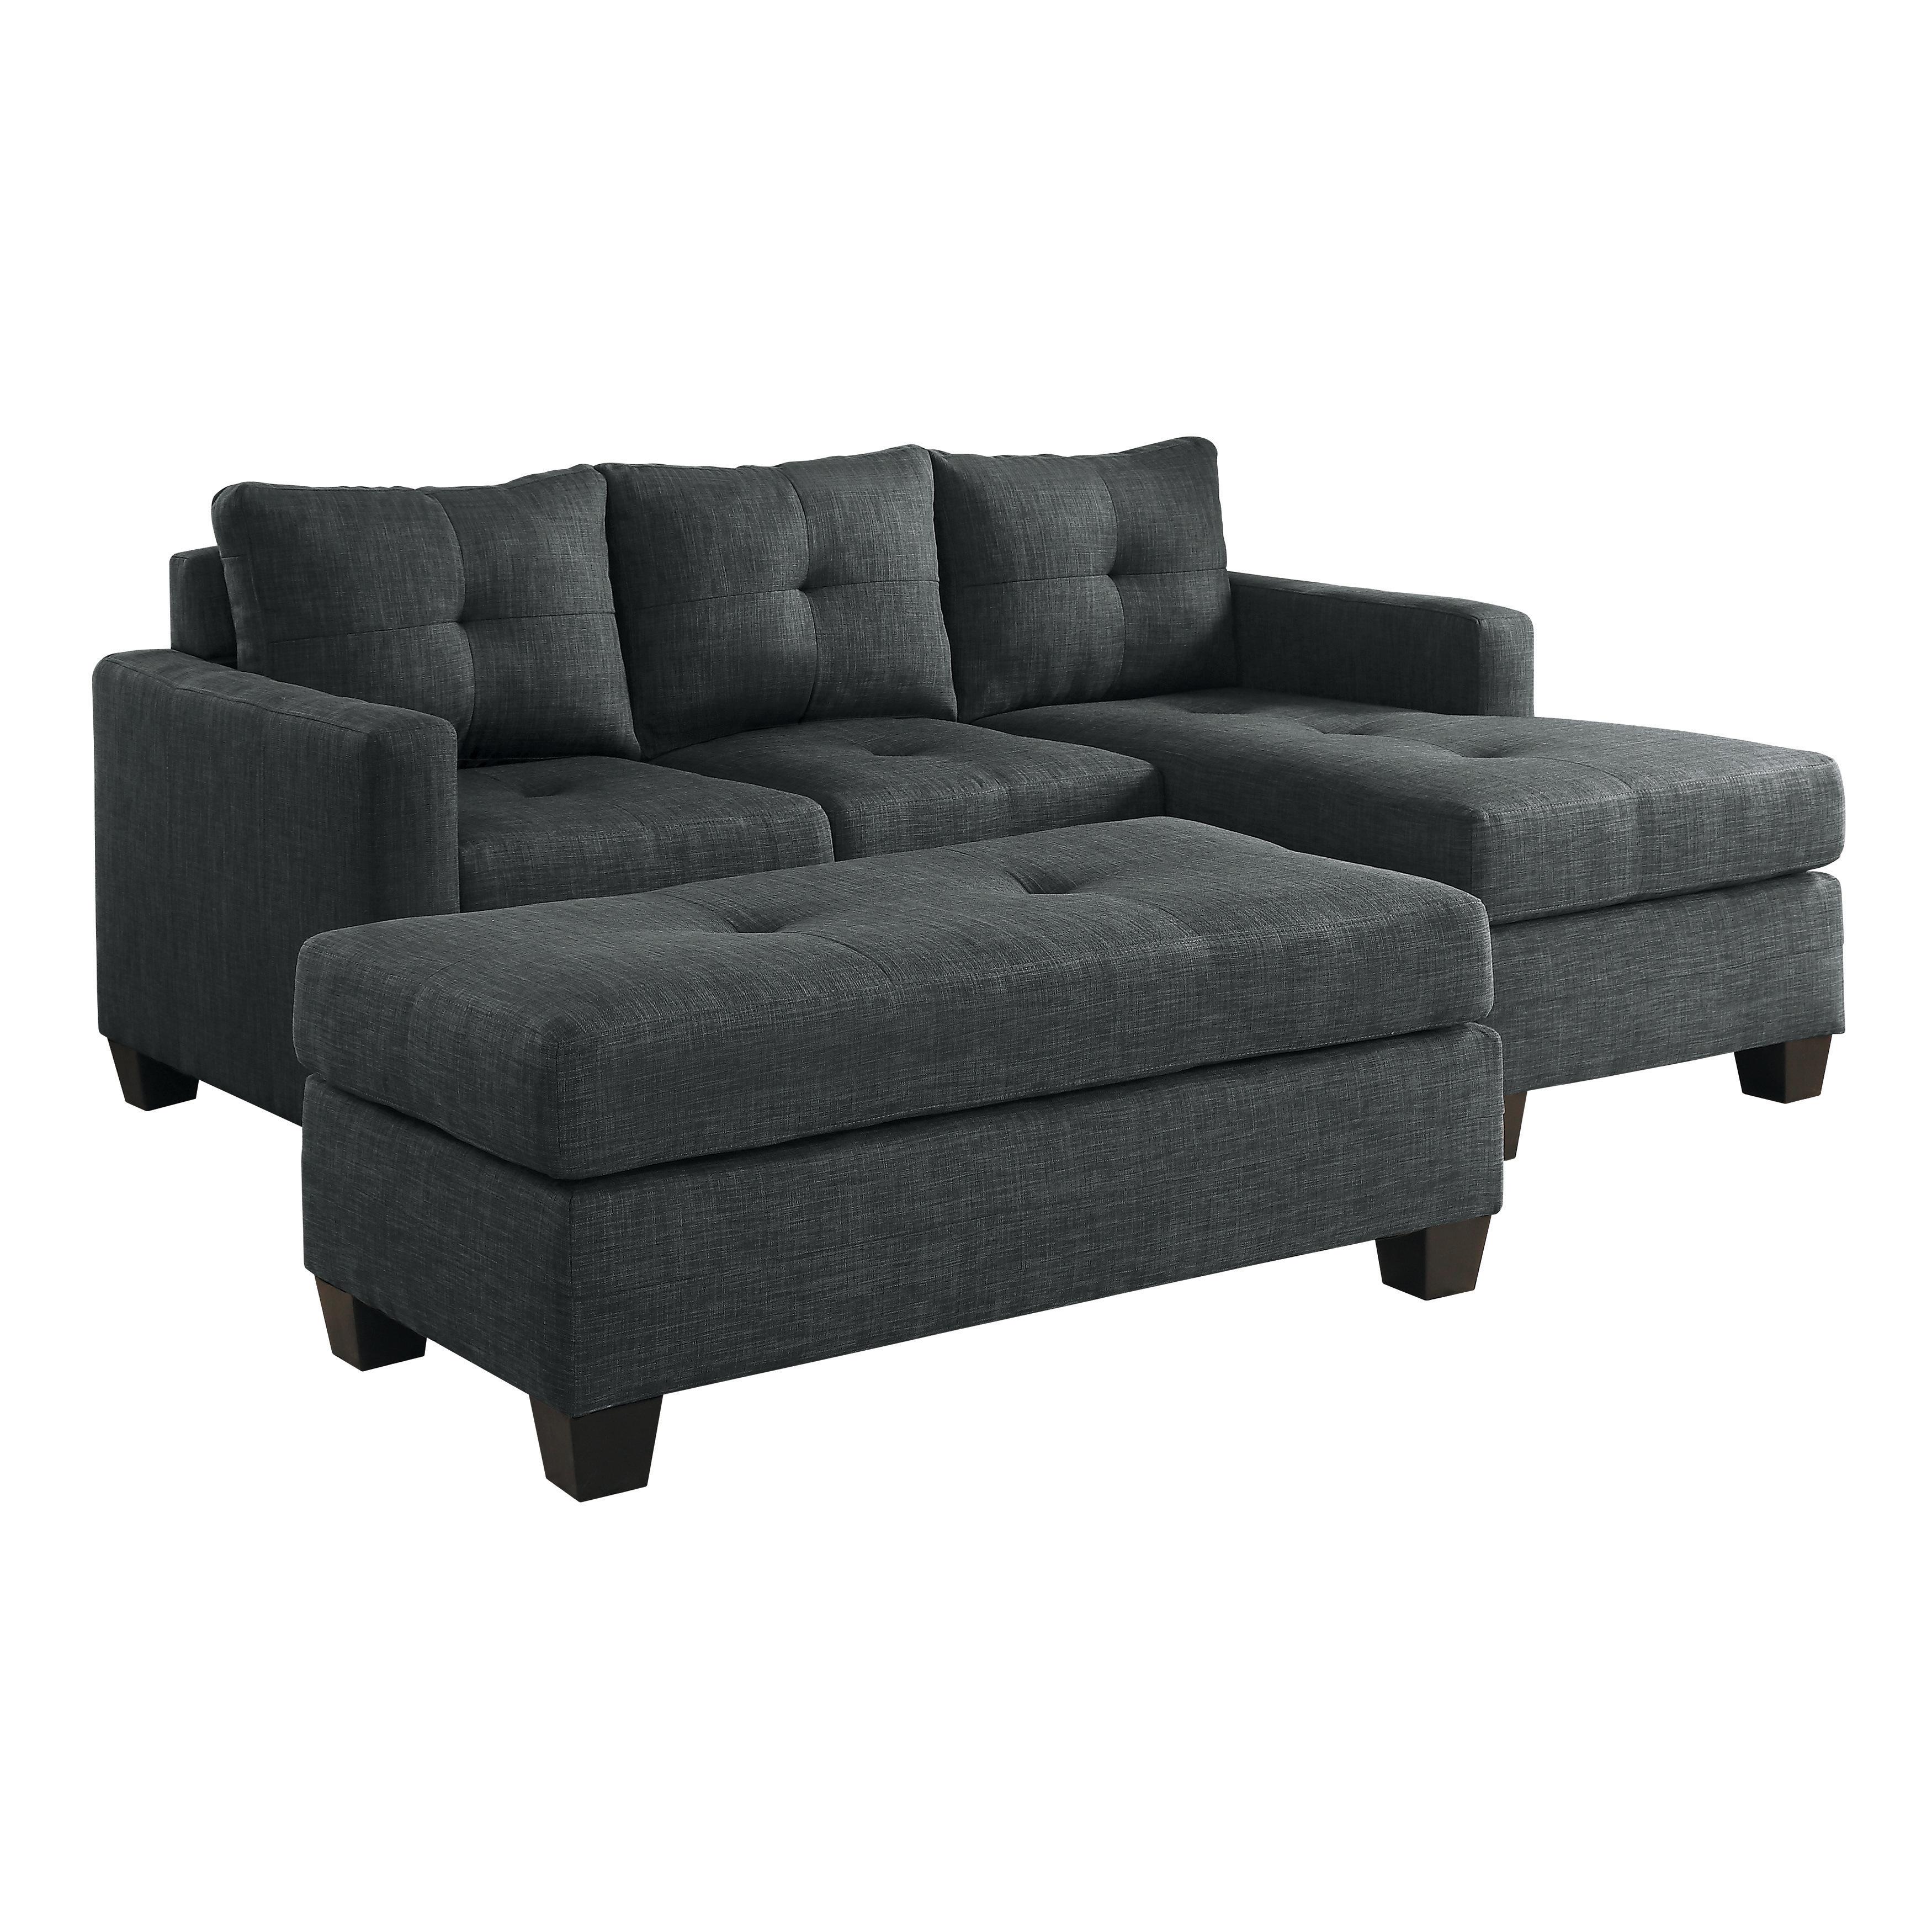 Transitional Sofa Chaise w/Ottoman 9789DG*2OT Phelps 9789DG*2OT in Dark Gray 